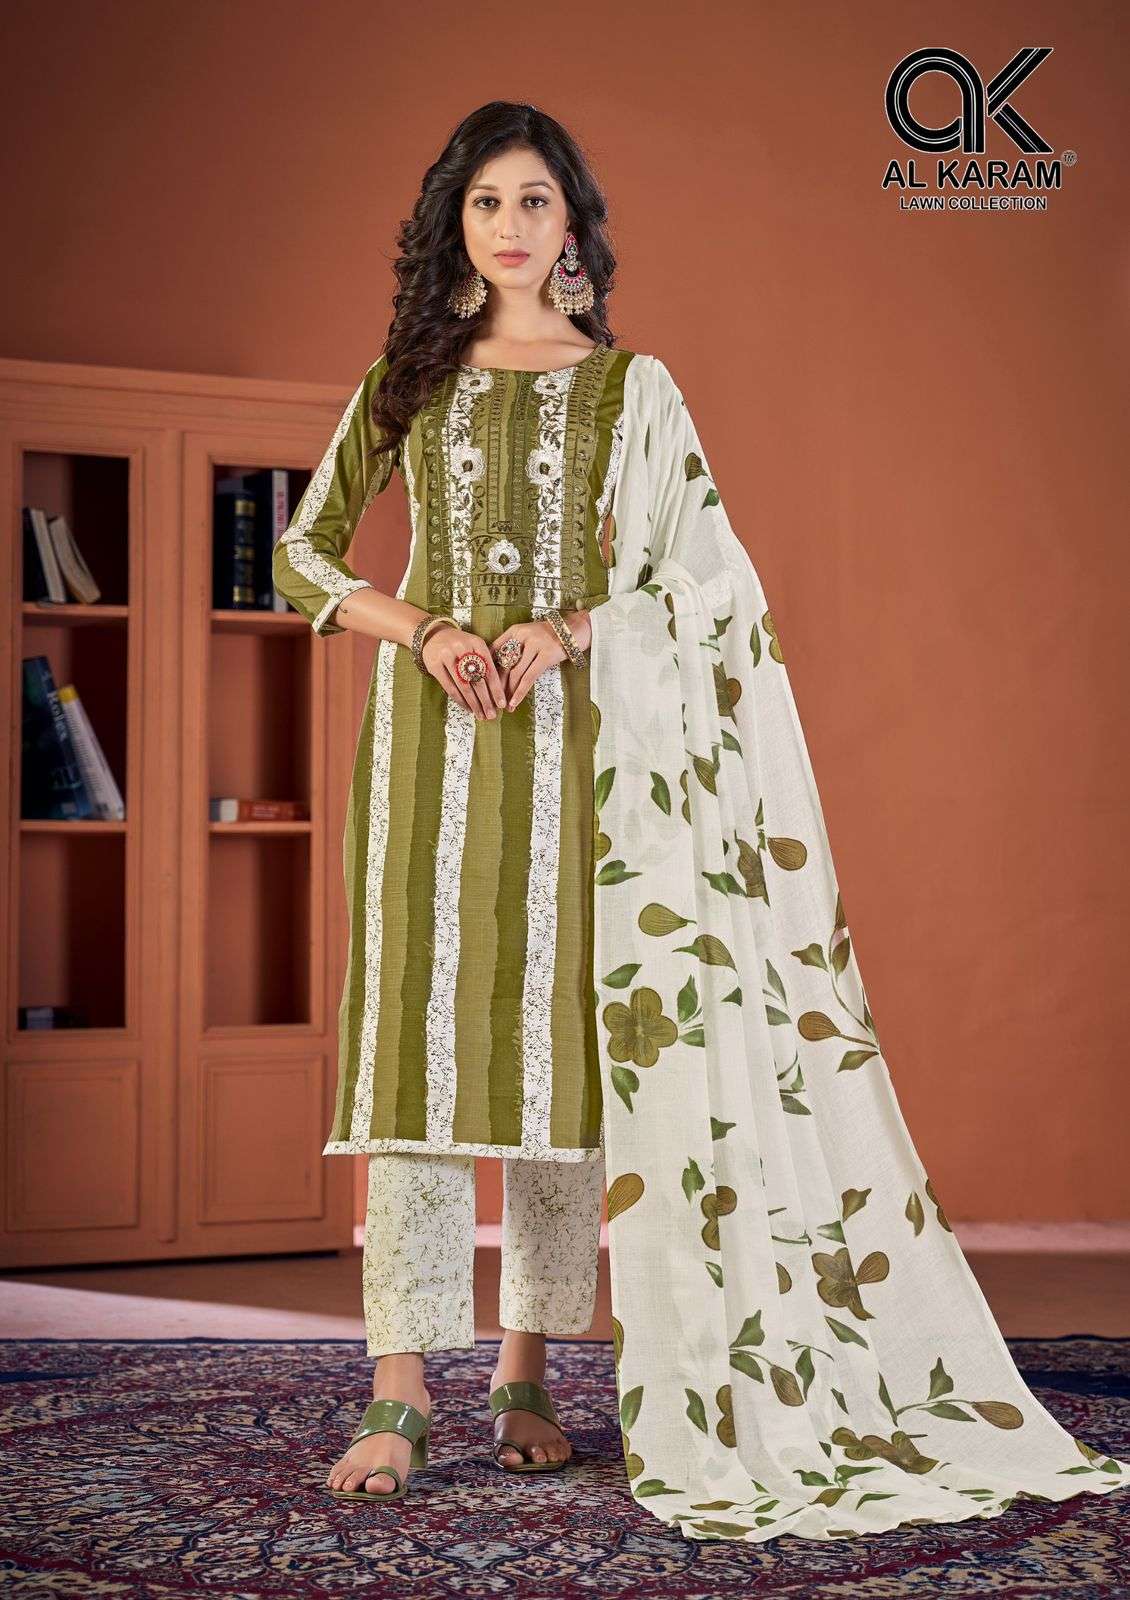 al karam heritage 1001-1008 series fancy daily wear cotton salwar kameez wholesale price surat